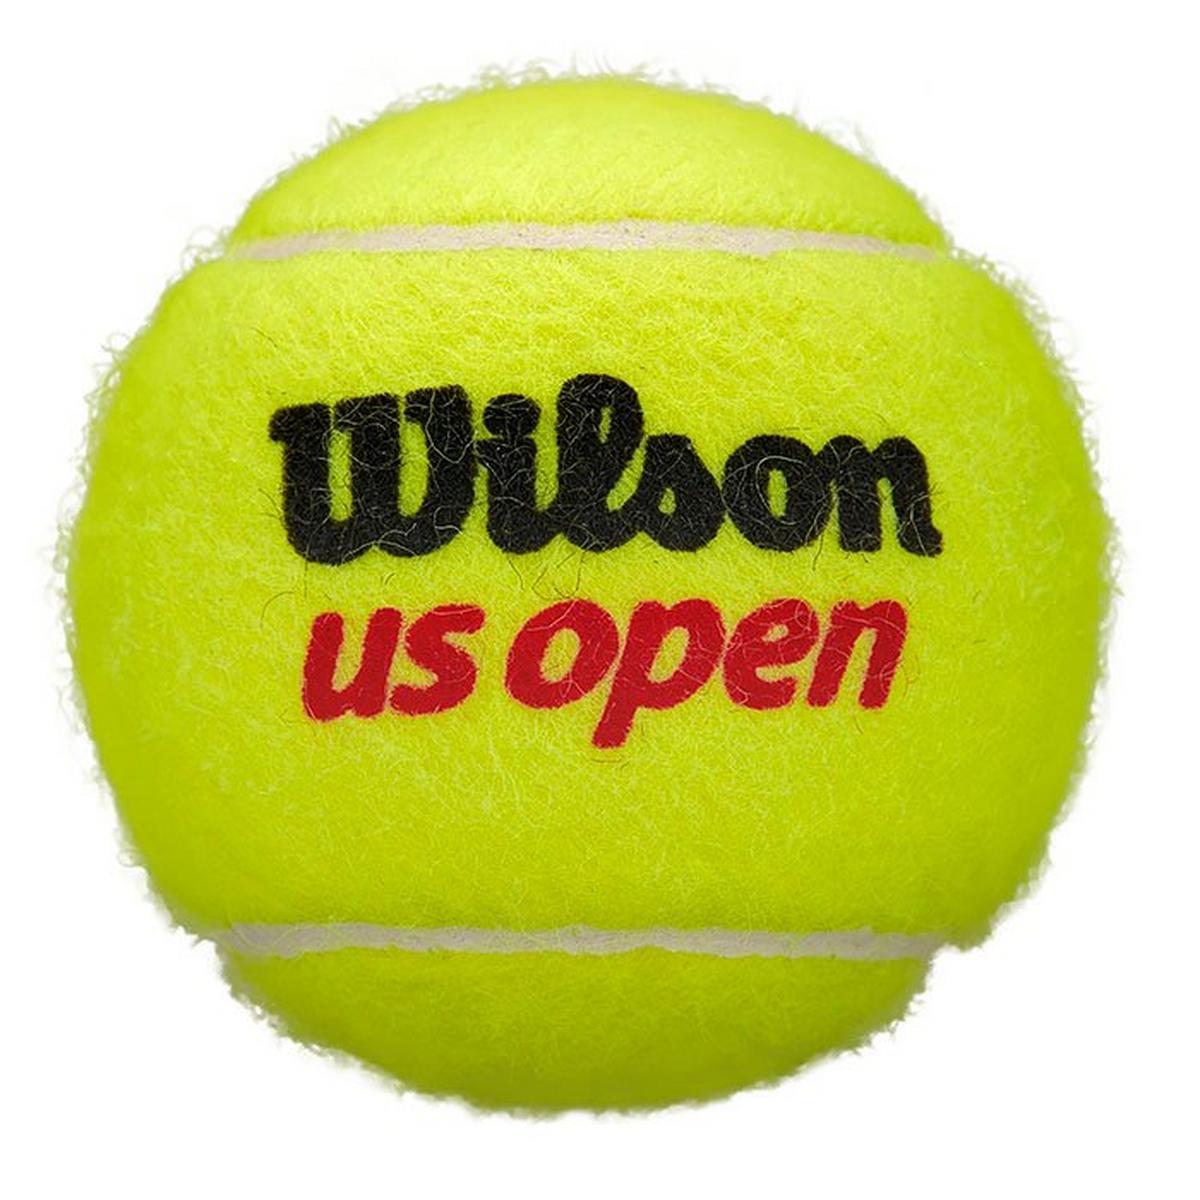 US Open Extra-Duty Tennis Ball